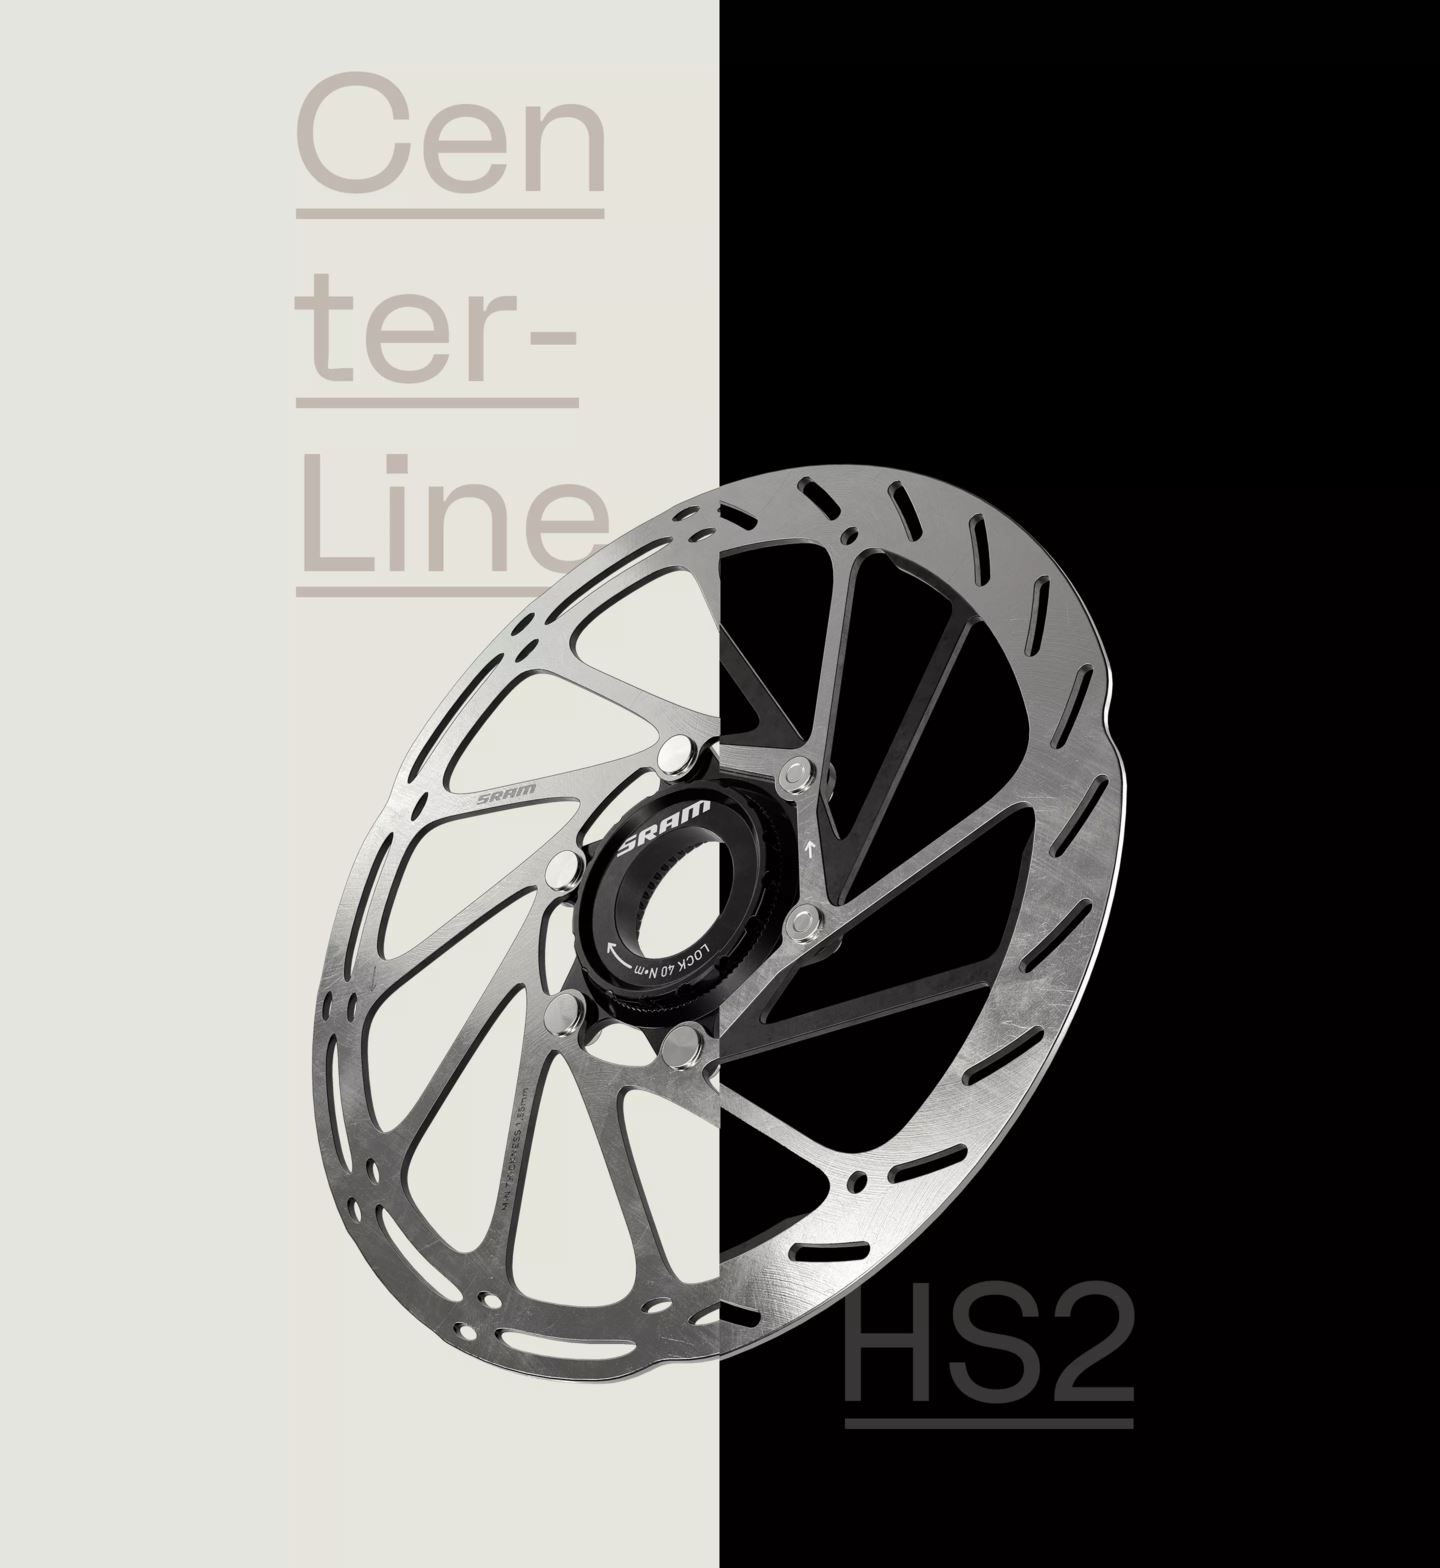 SRAM Centerline and HS2 rotors